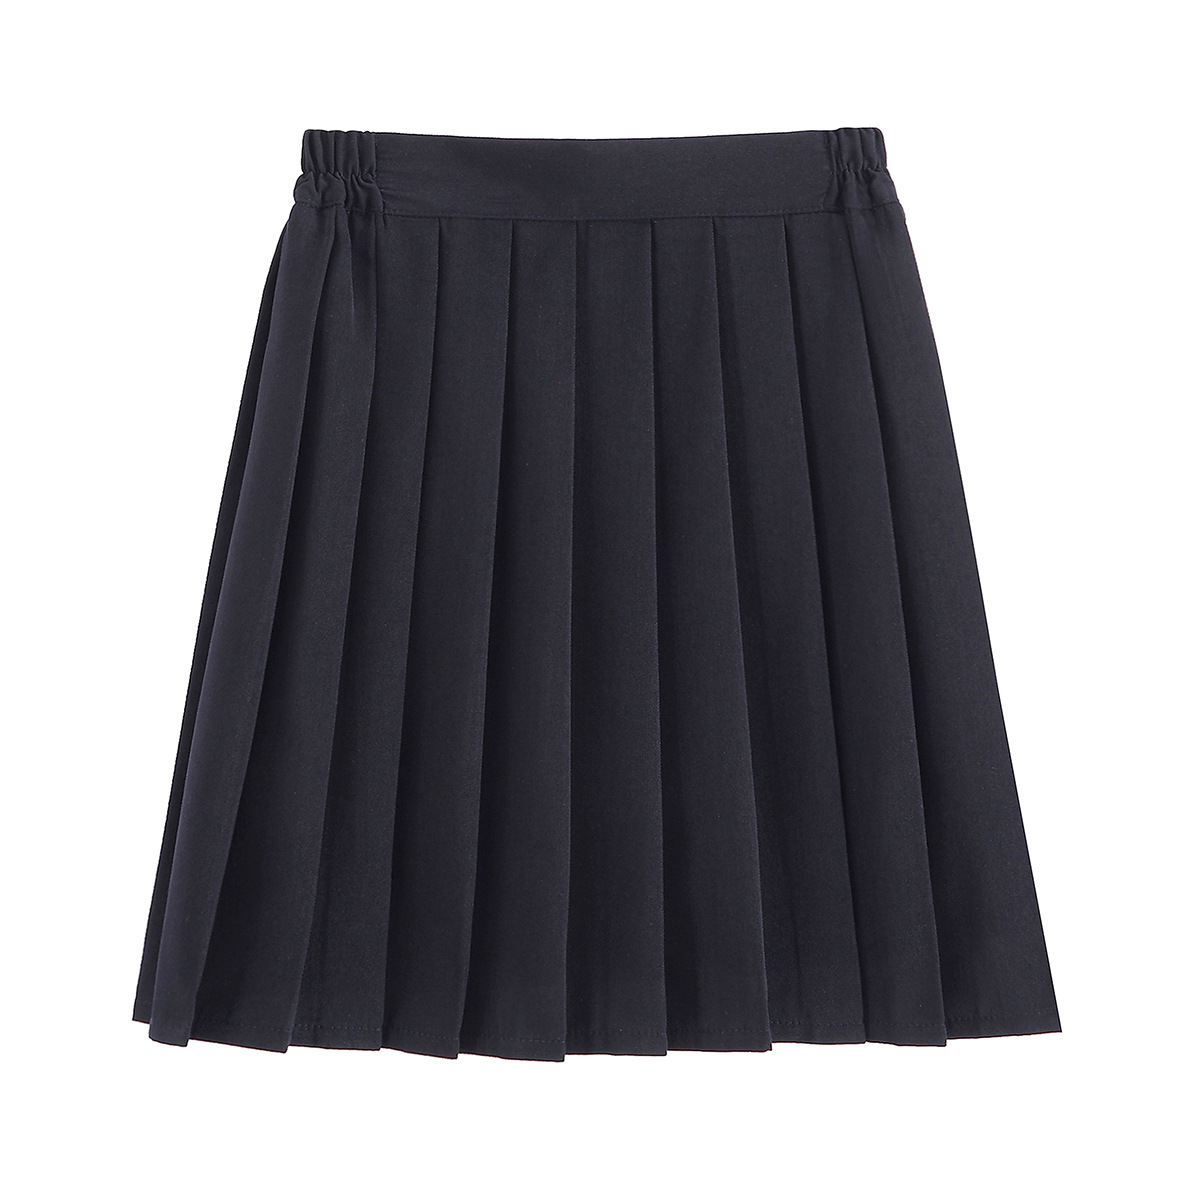 Design Girls School Uniform Black Pleated Skirt